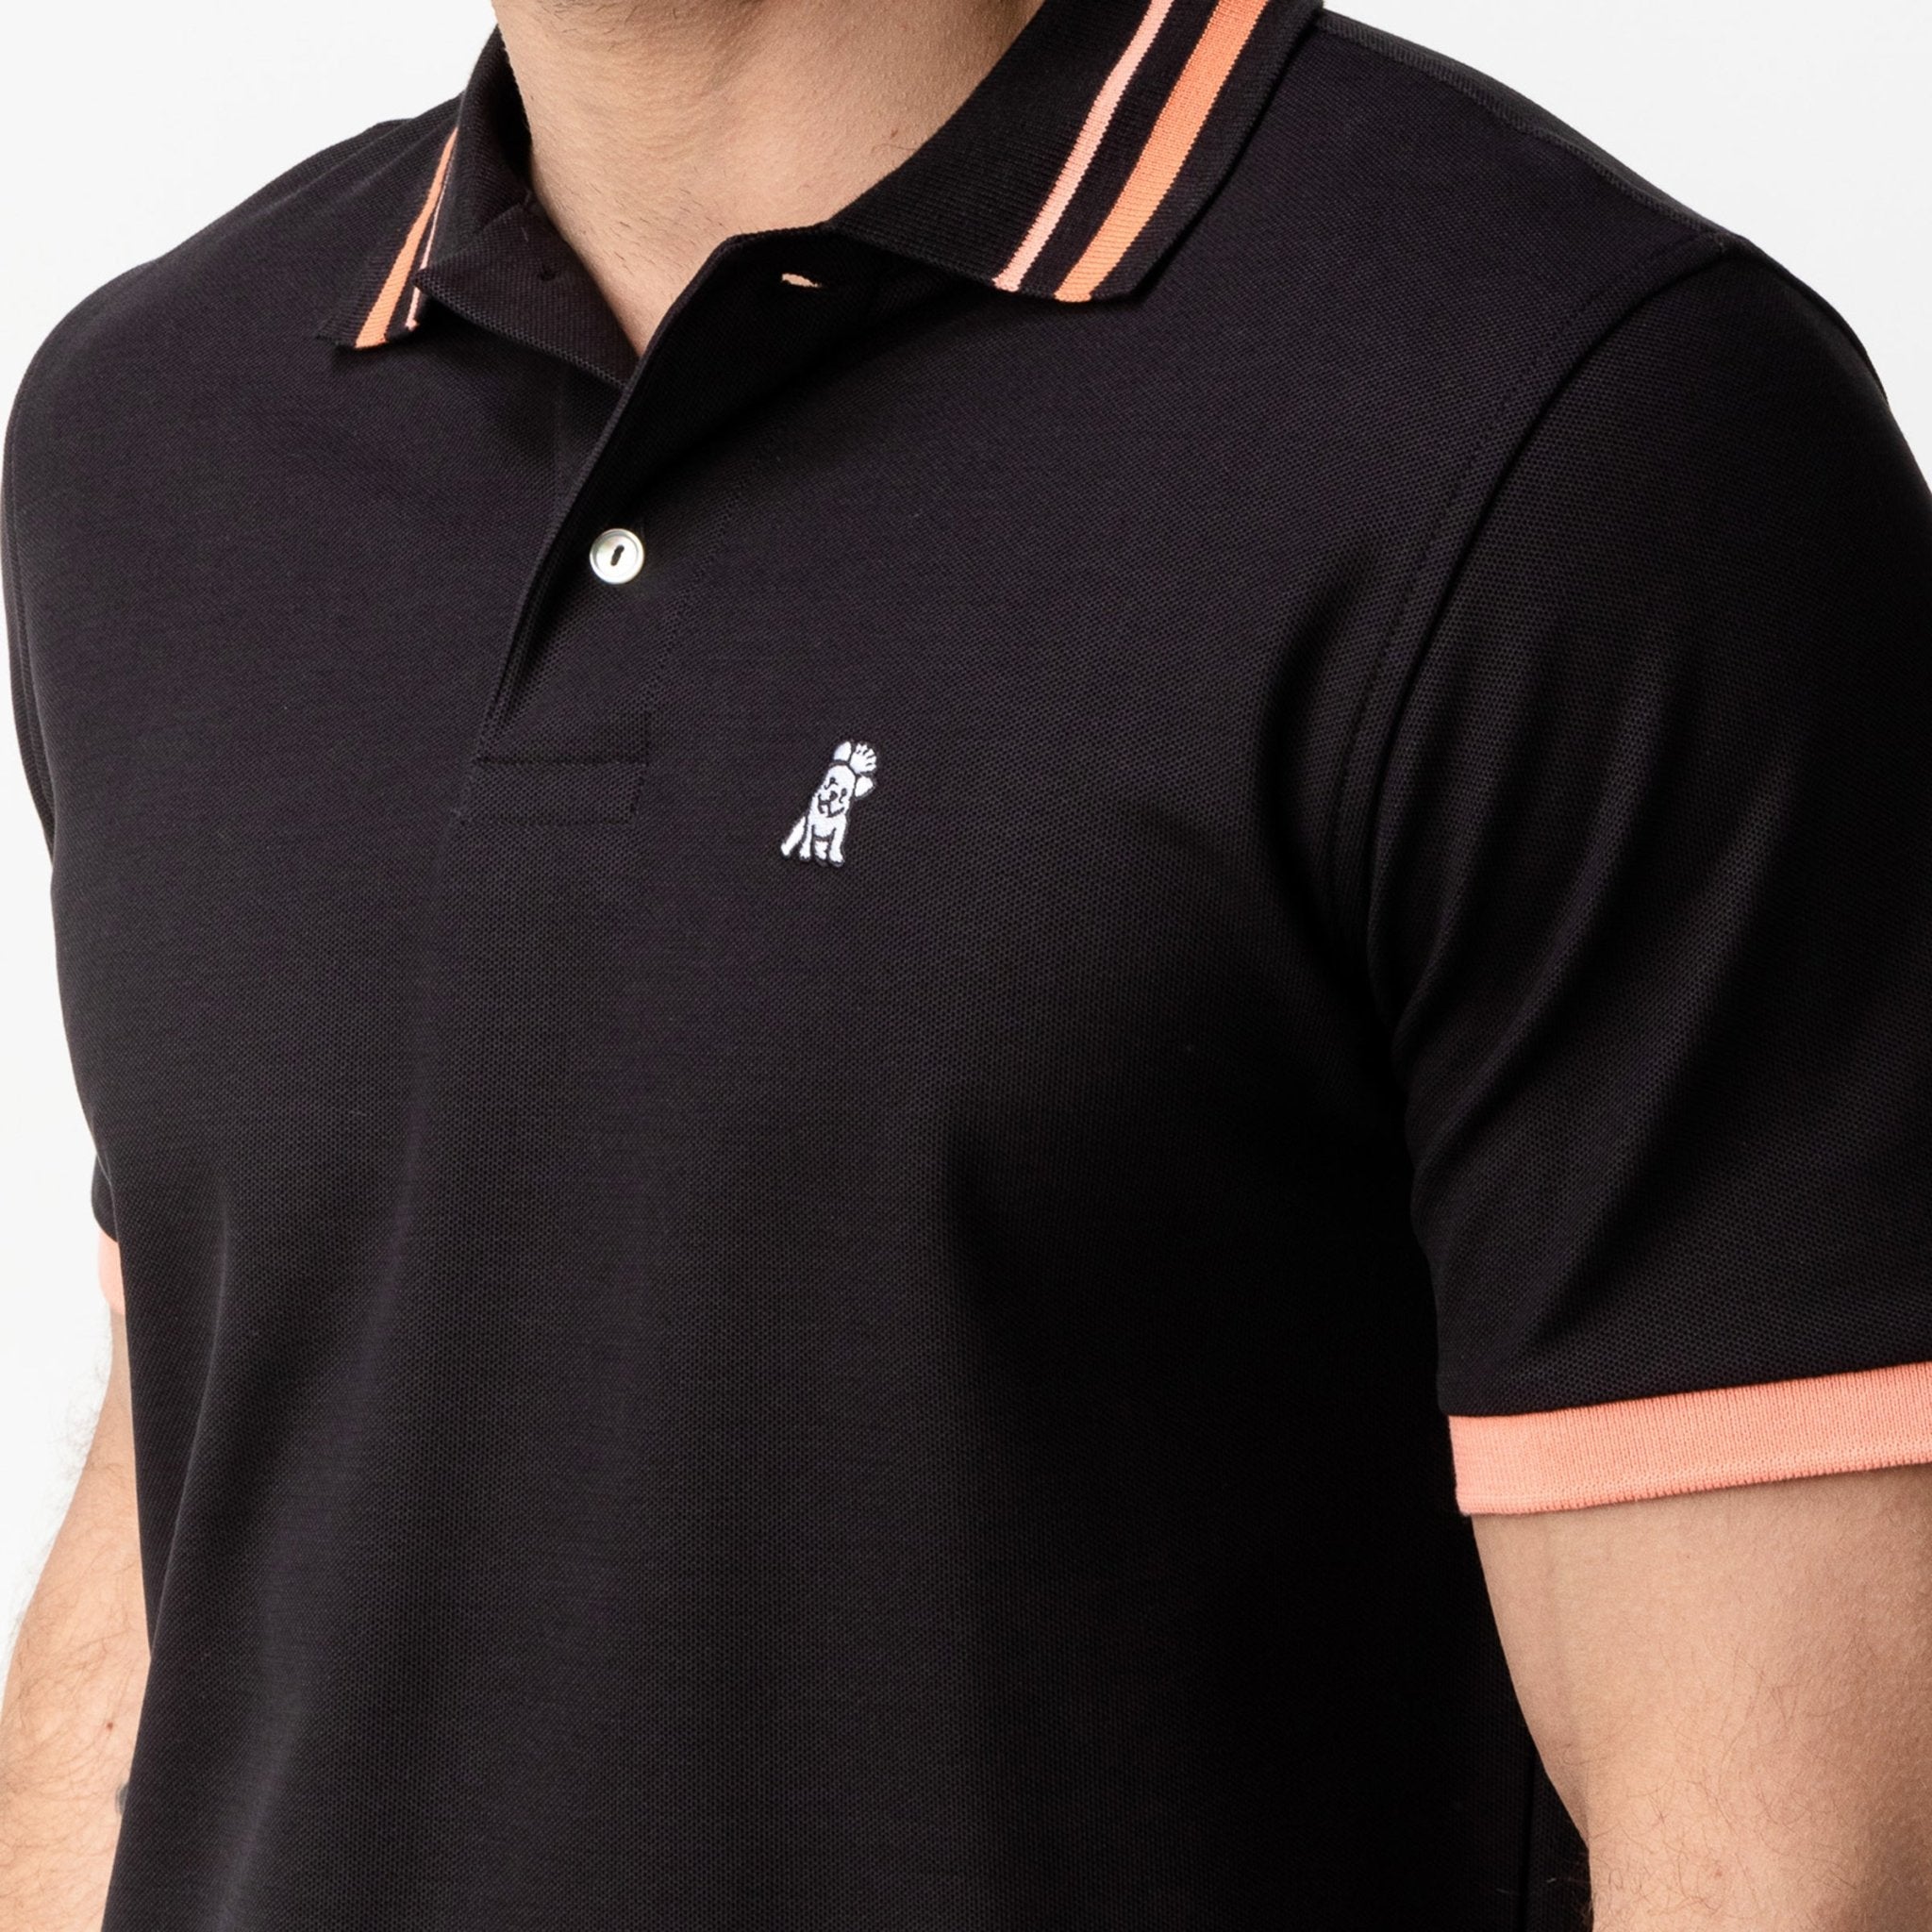 Men's Orange Striped Accents Piqué Polo Shirt - JAMES BARK